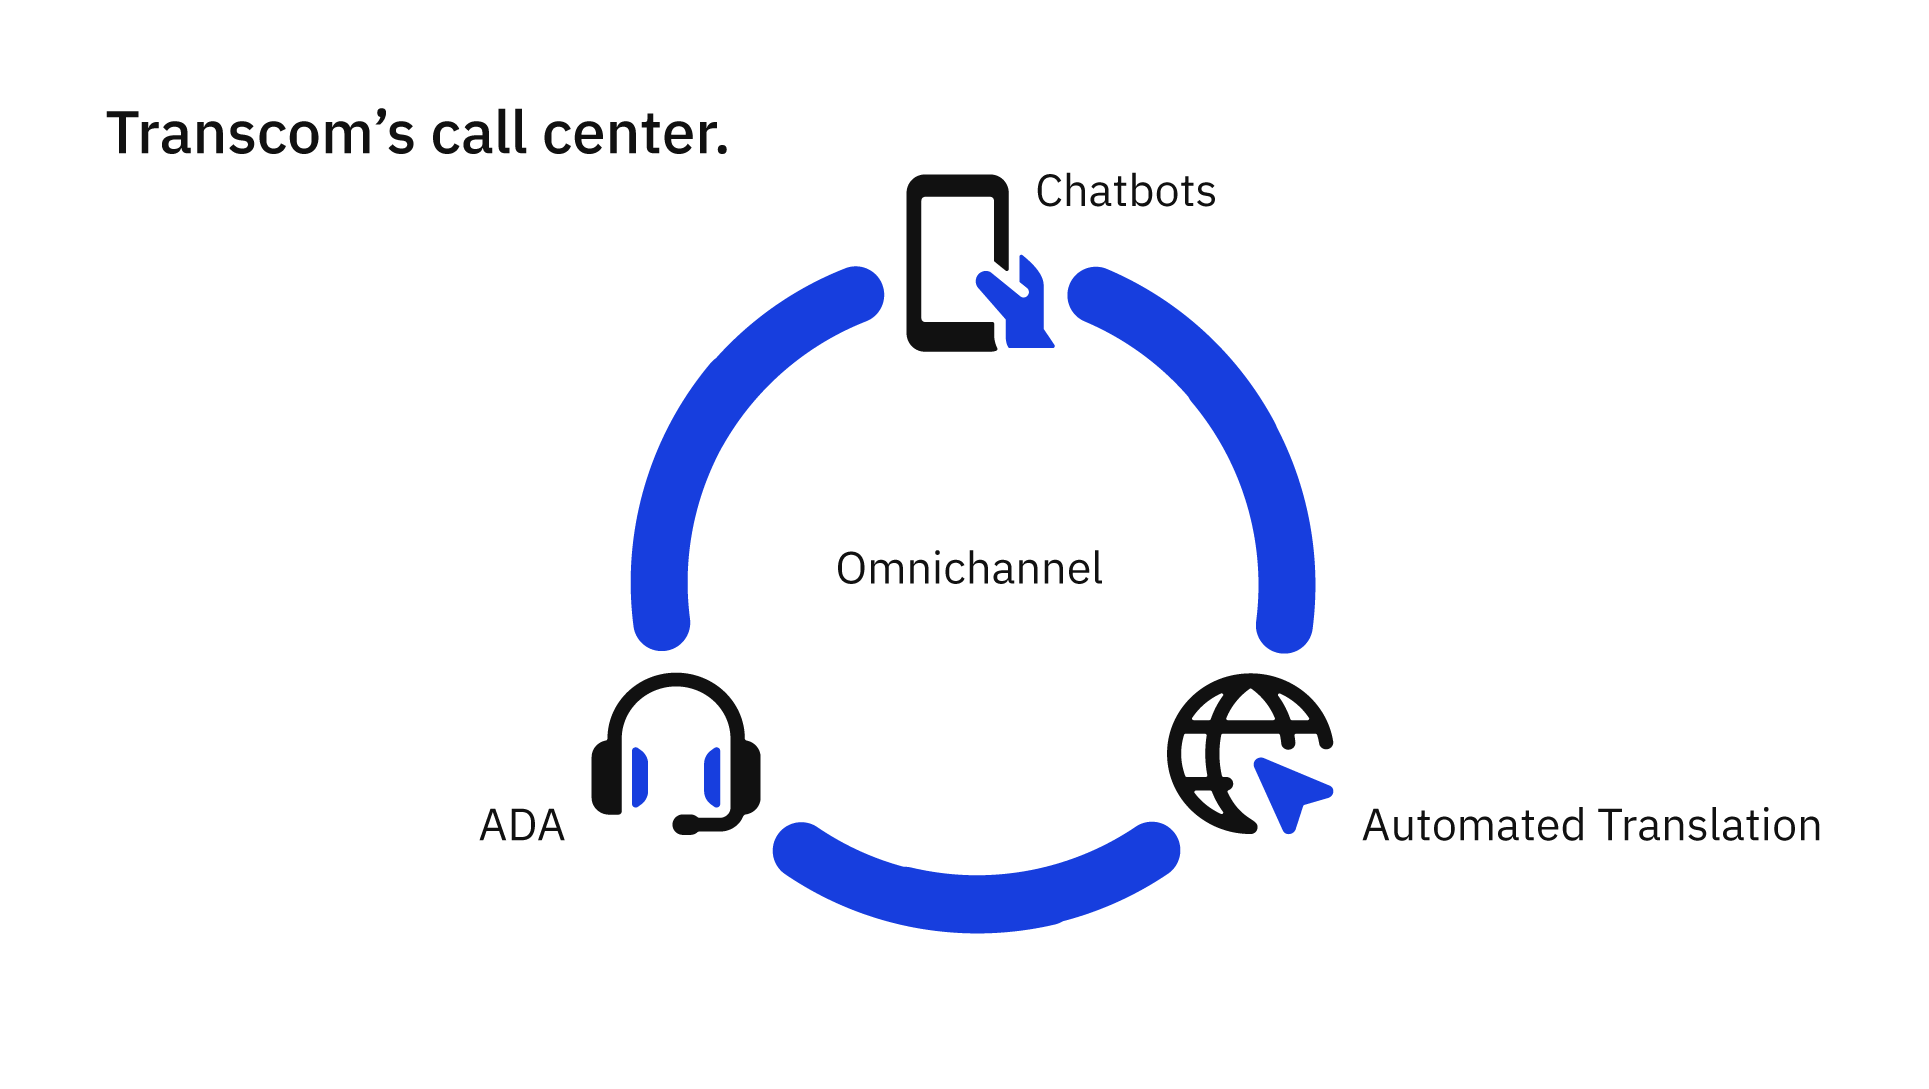 Transcom's e-commerce call center outsourcing services